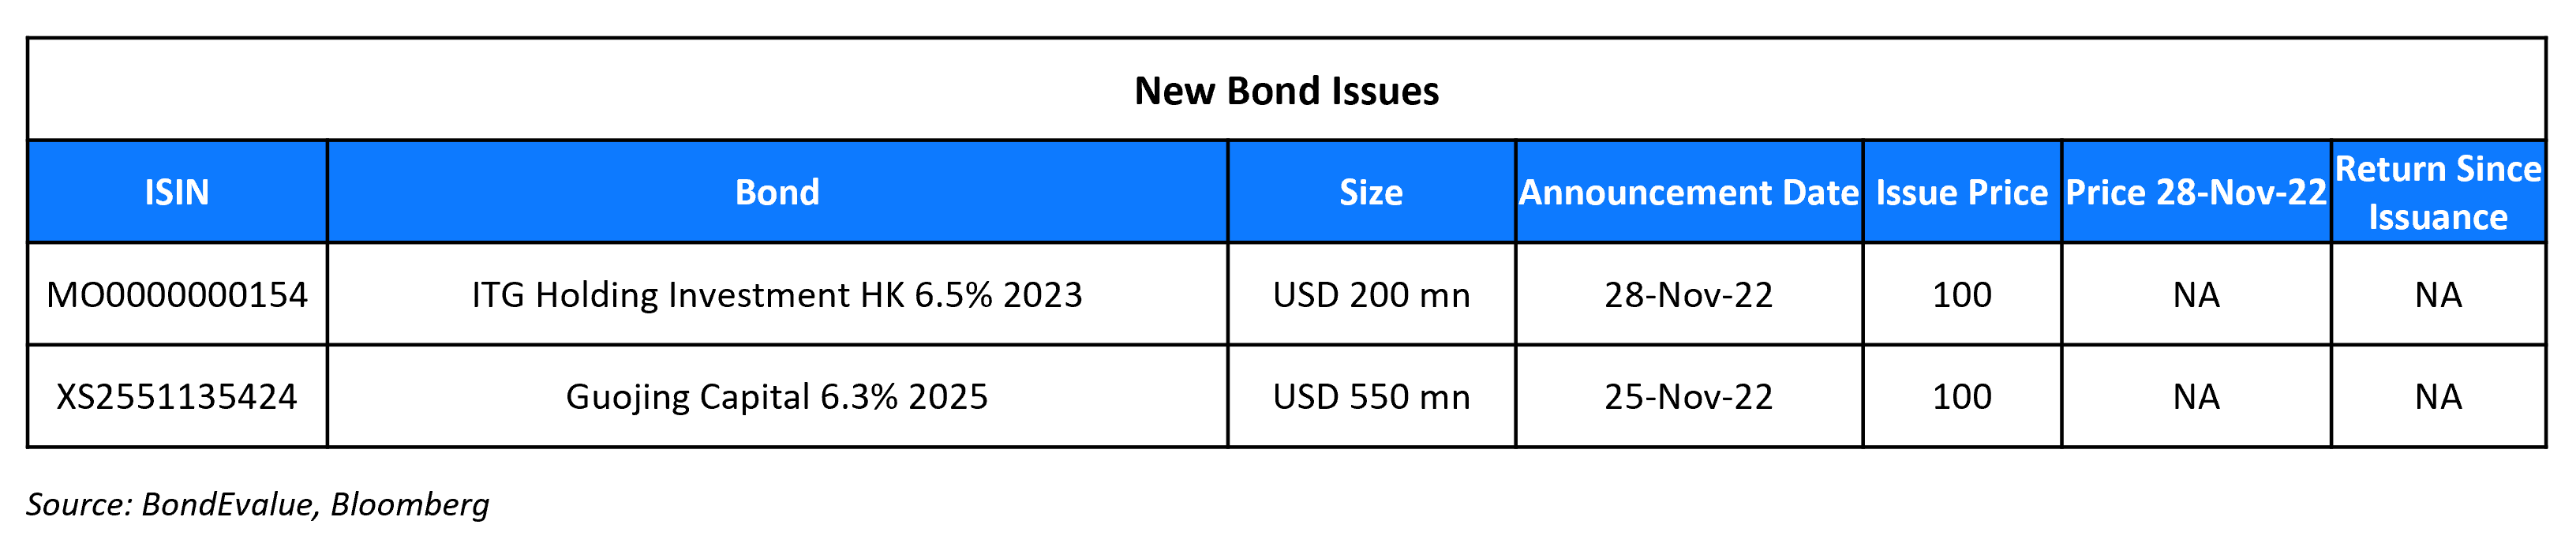 New Bond Issues 28 Nov 22